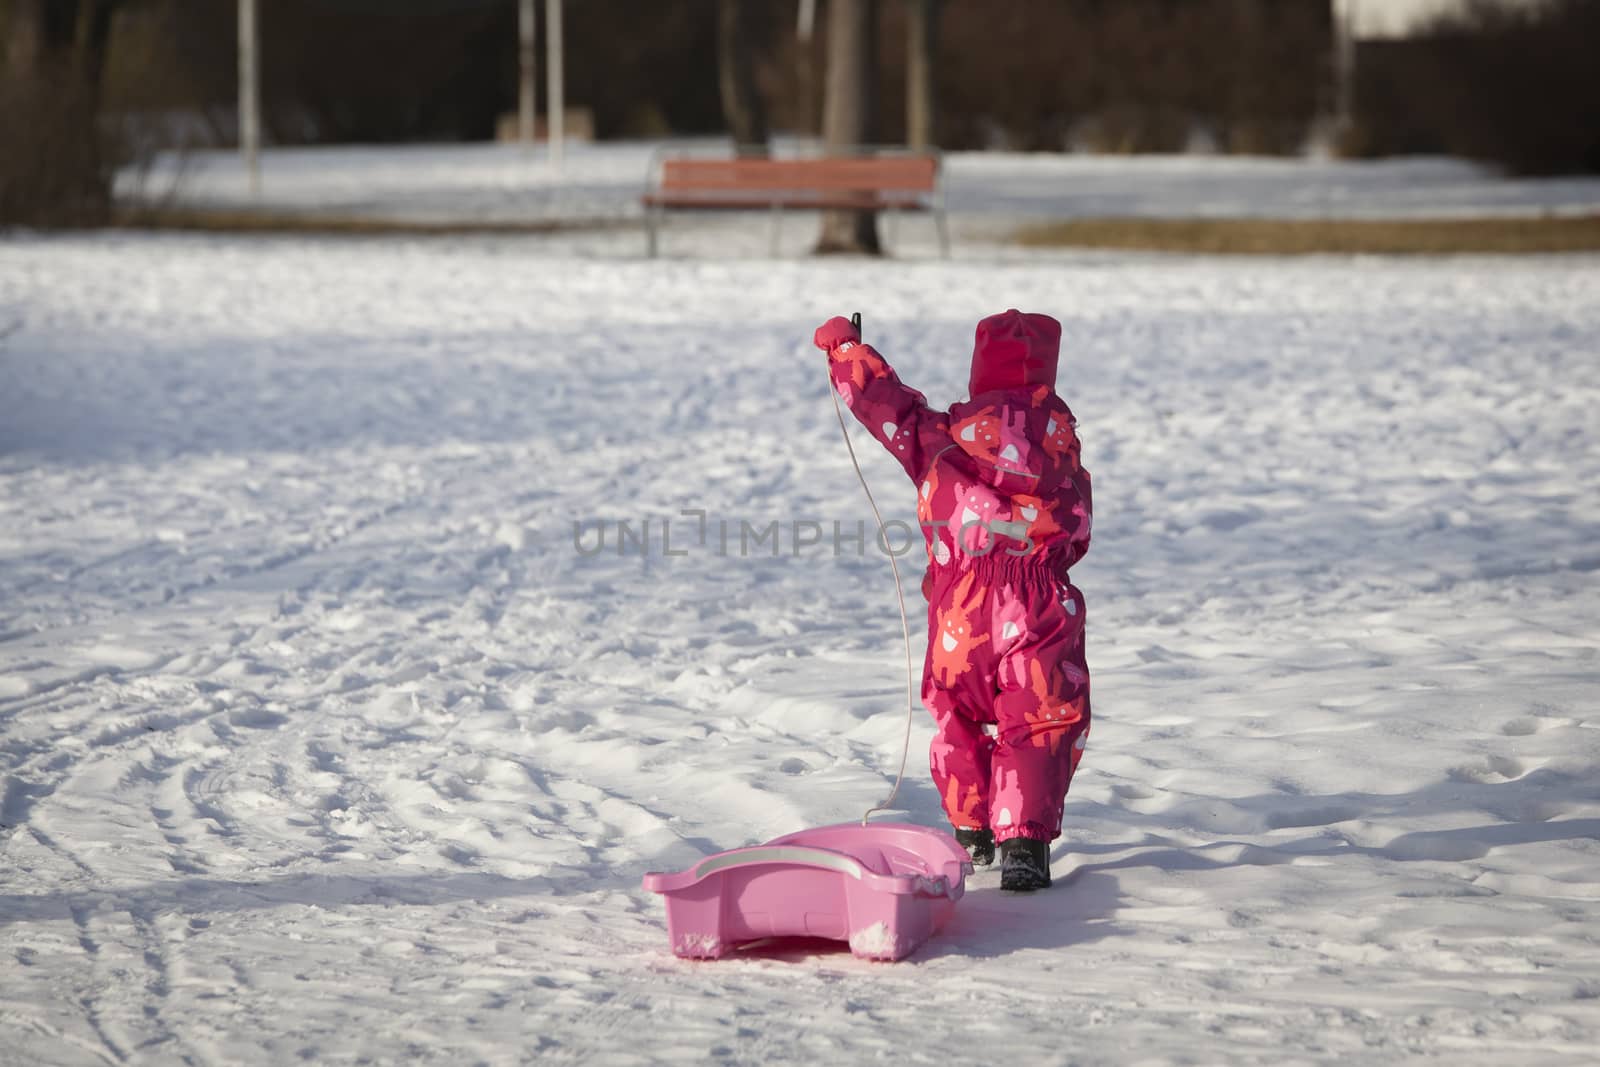 The girl enjoys winter by leorantala